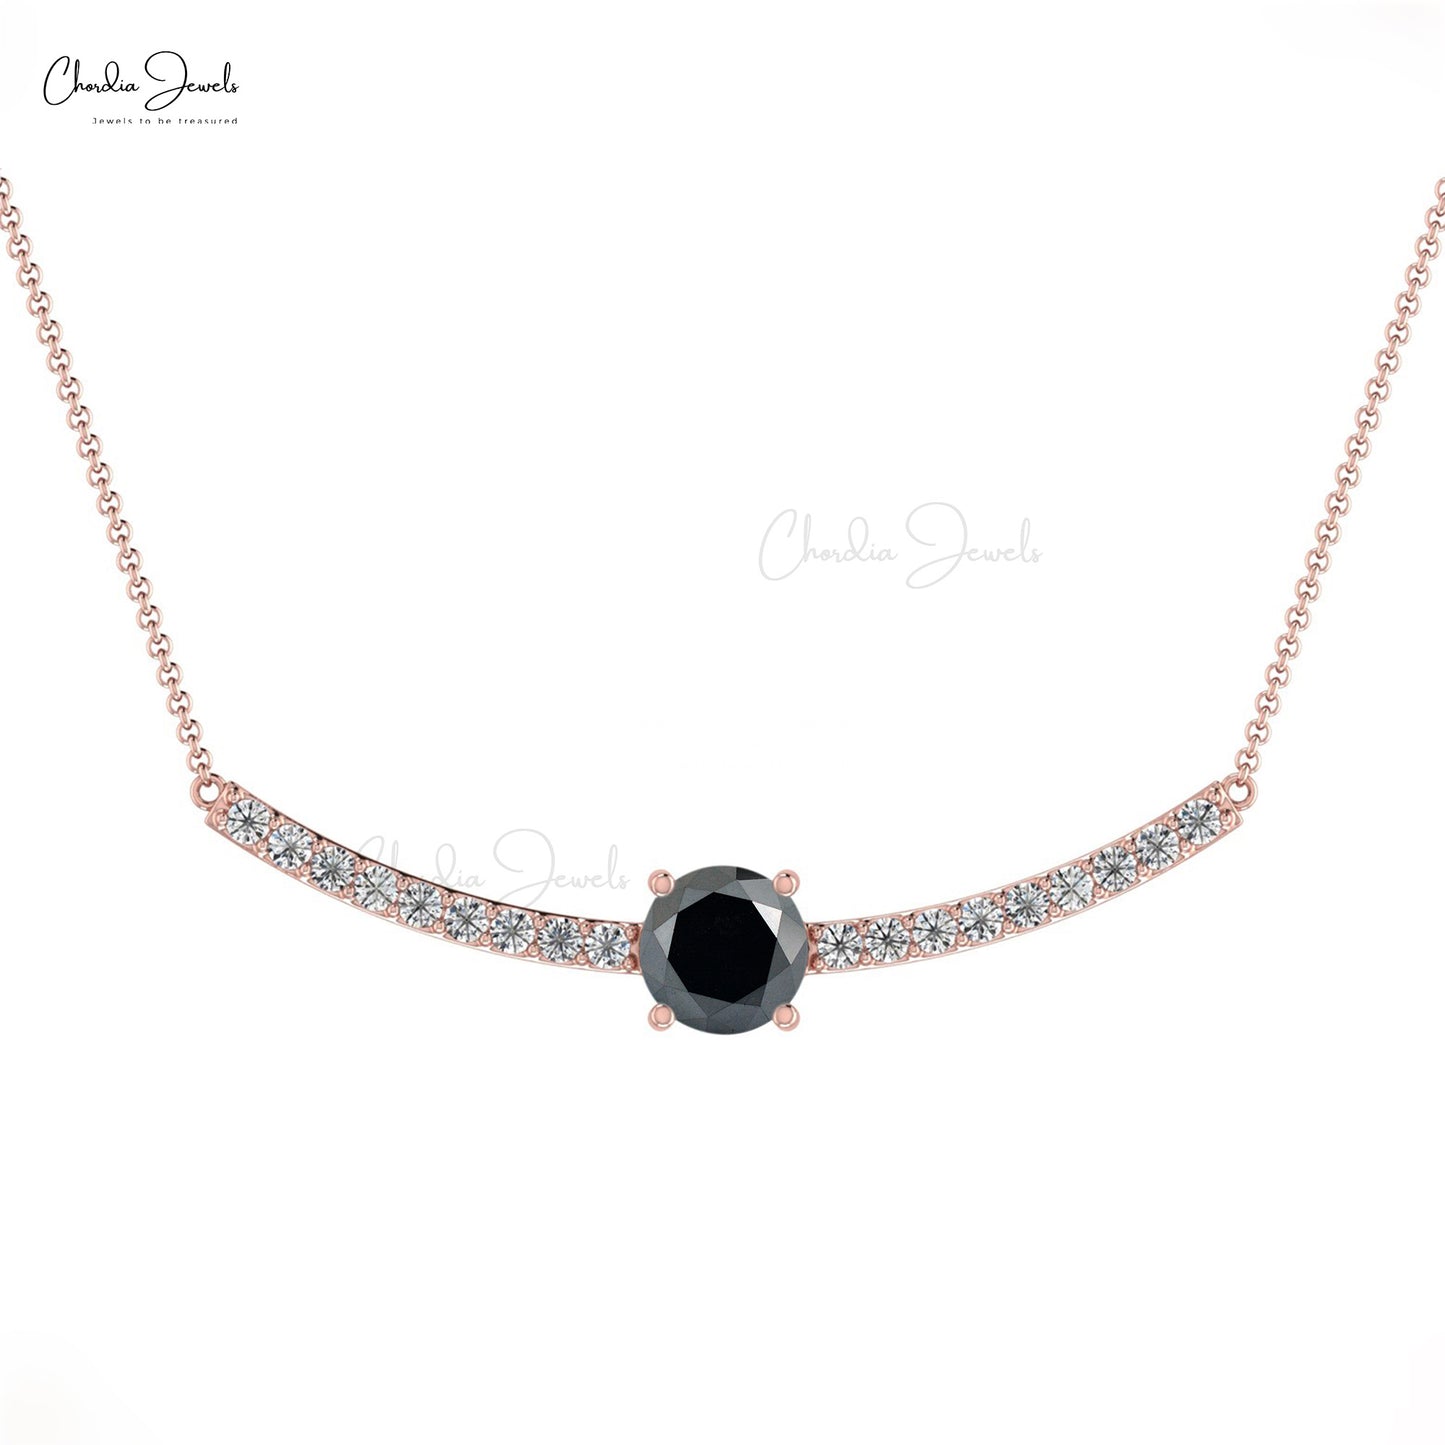 Cross Charm Classic Gigi Black diamond necklace, Rose Gold, 16.5